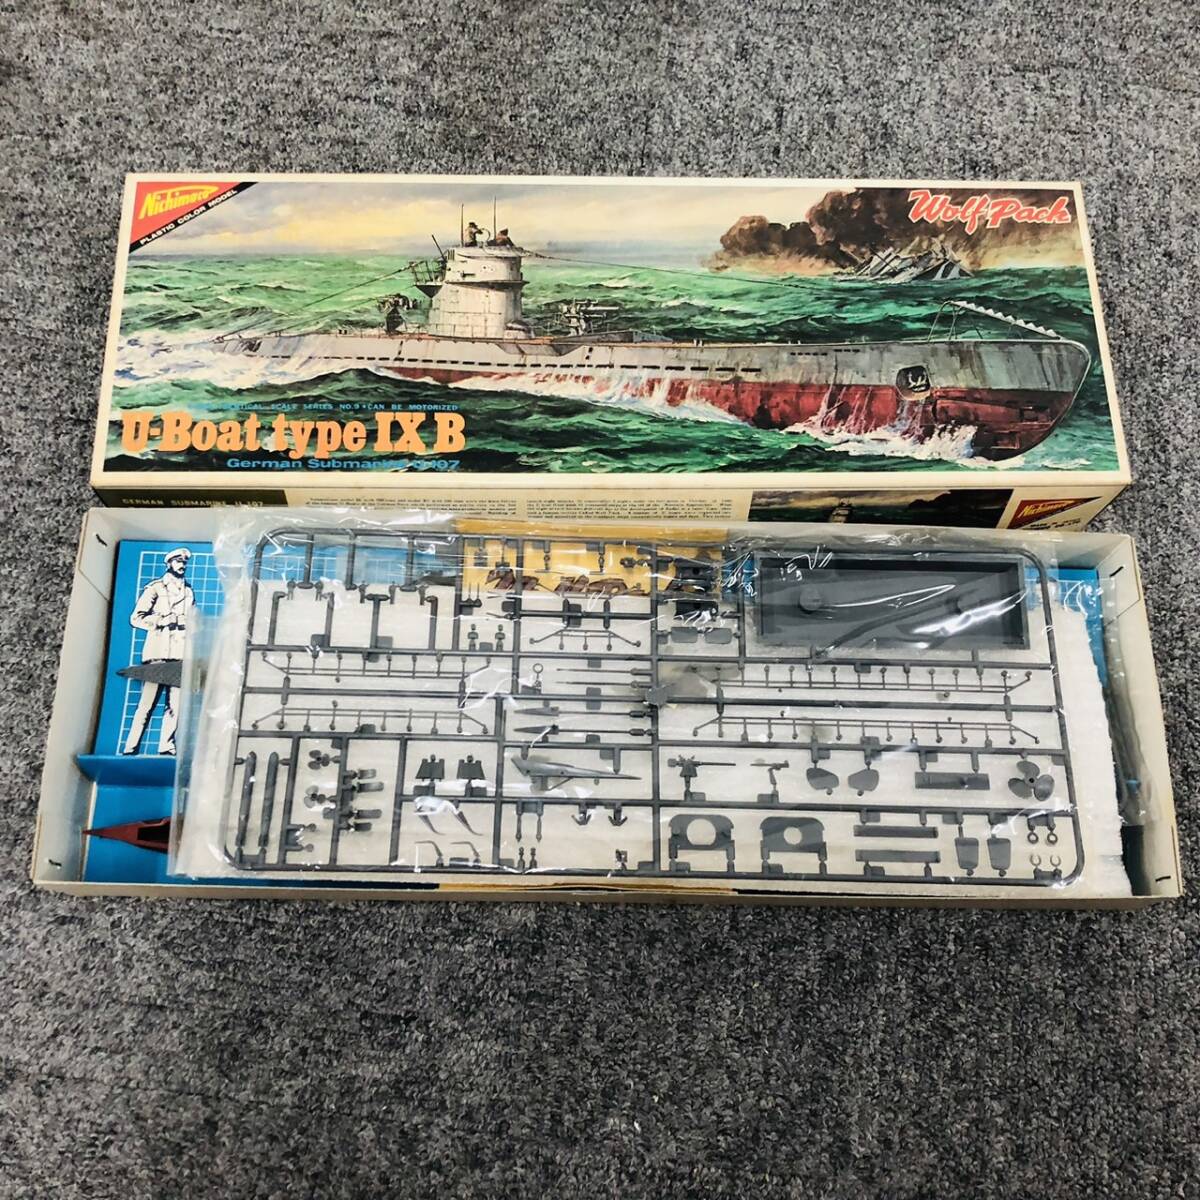 C254-Z1-1212 Nichimonichimo plastic model 3 point summarize box attaching 1:200 SCALE Germany navy . water .U boat U-107 U511 toy toy vehicle ②